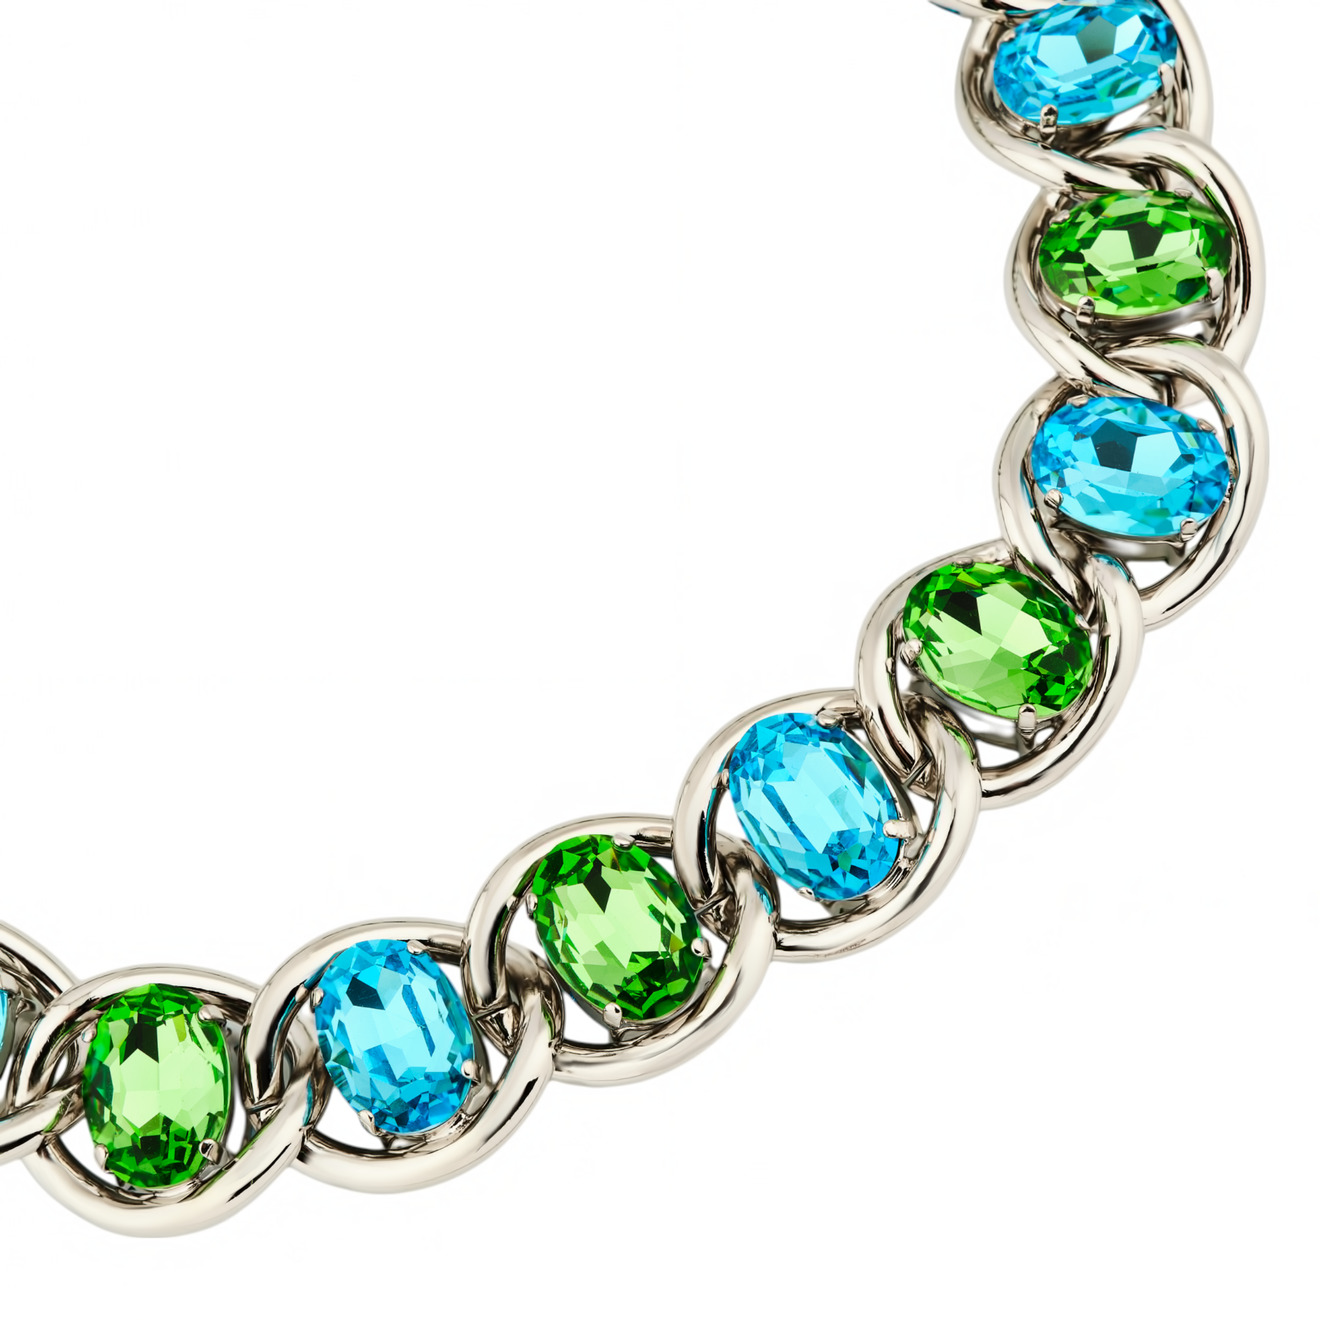 Marni Колье-цепь с зелено-голубыми кристаллами цена и фото